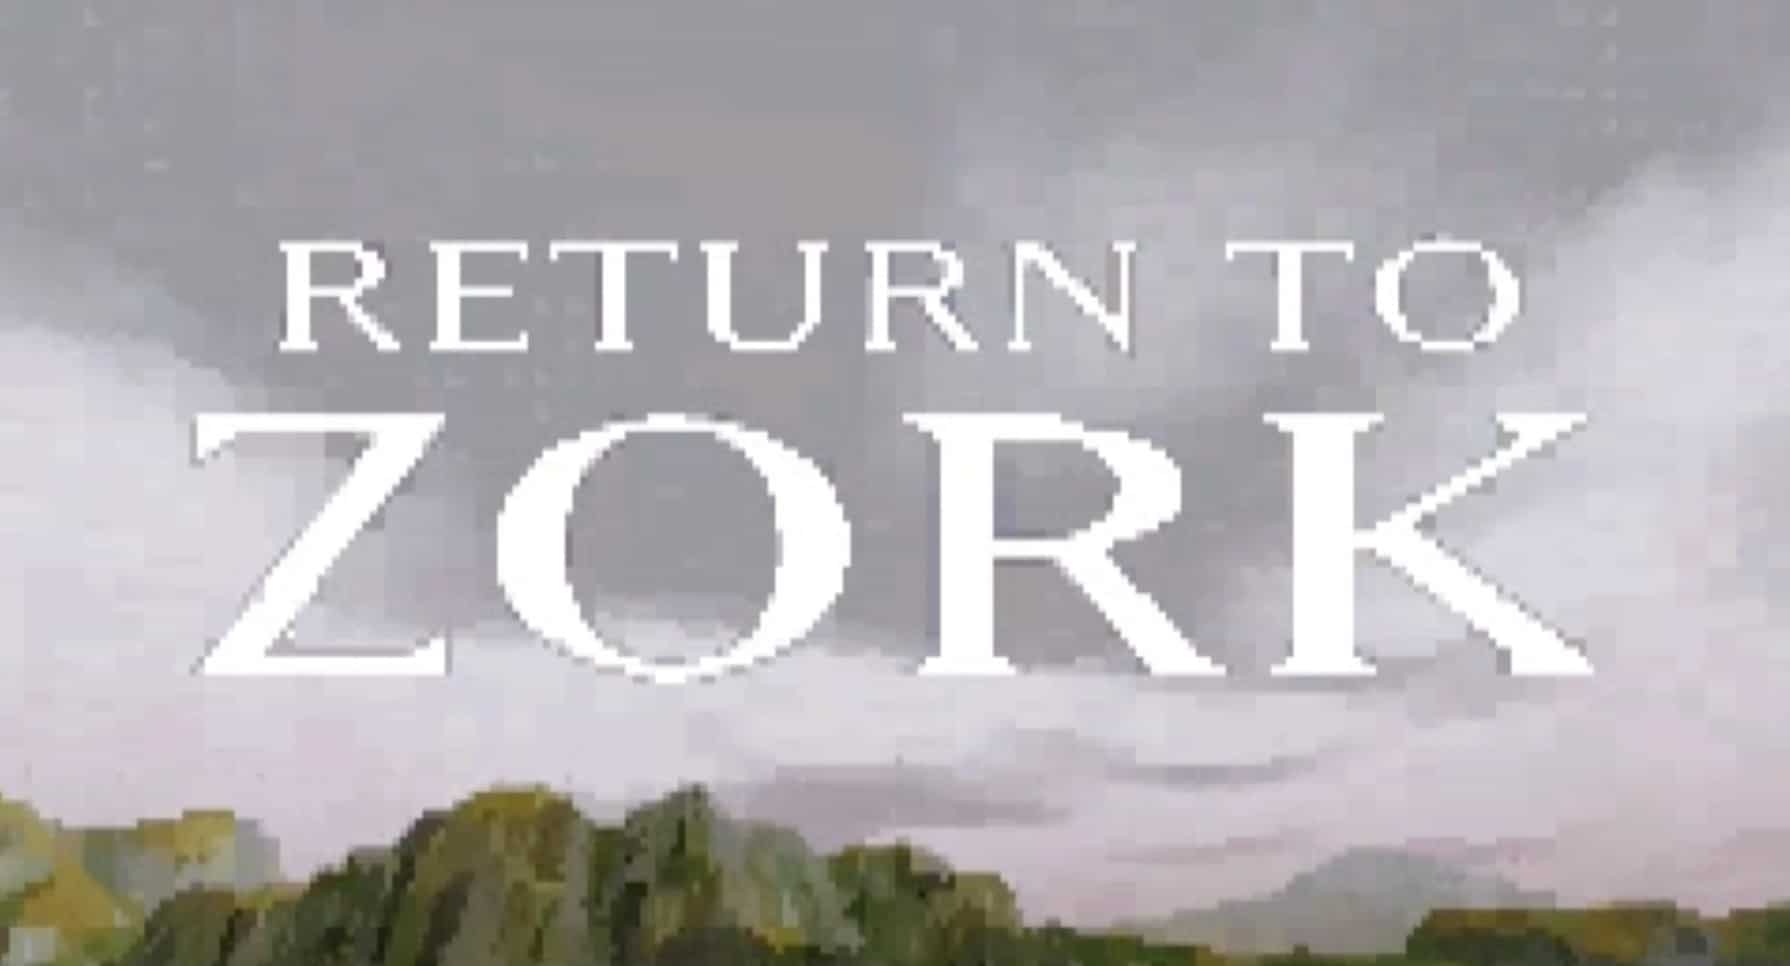 The Return to Zork logo